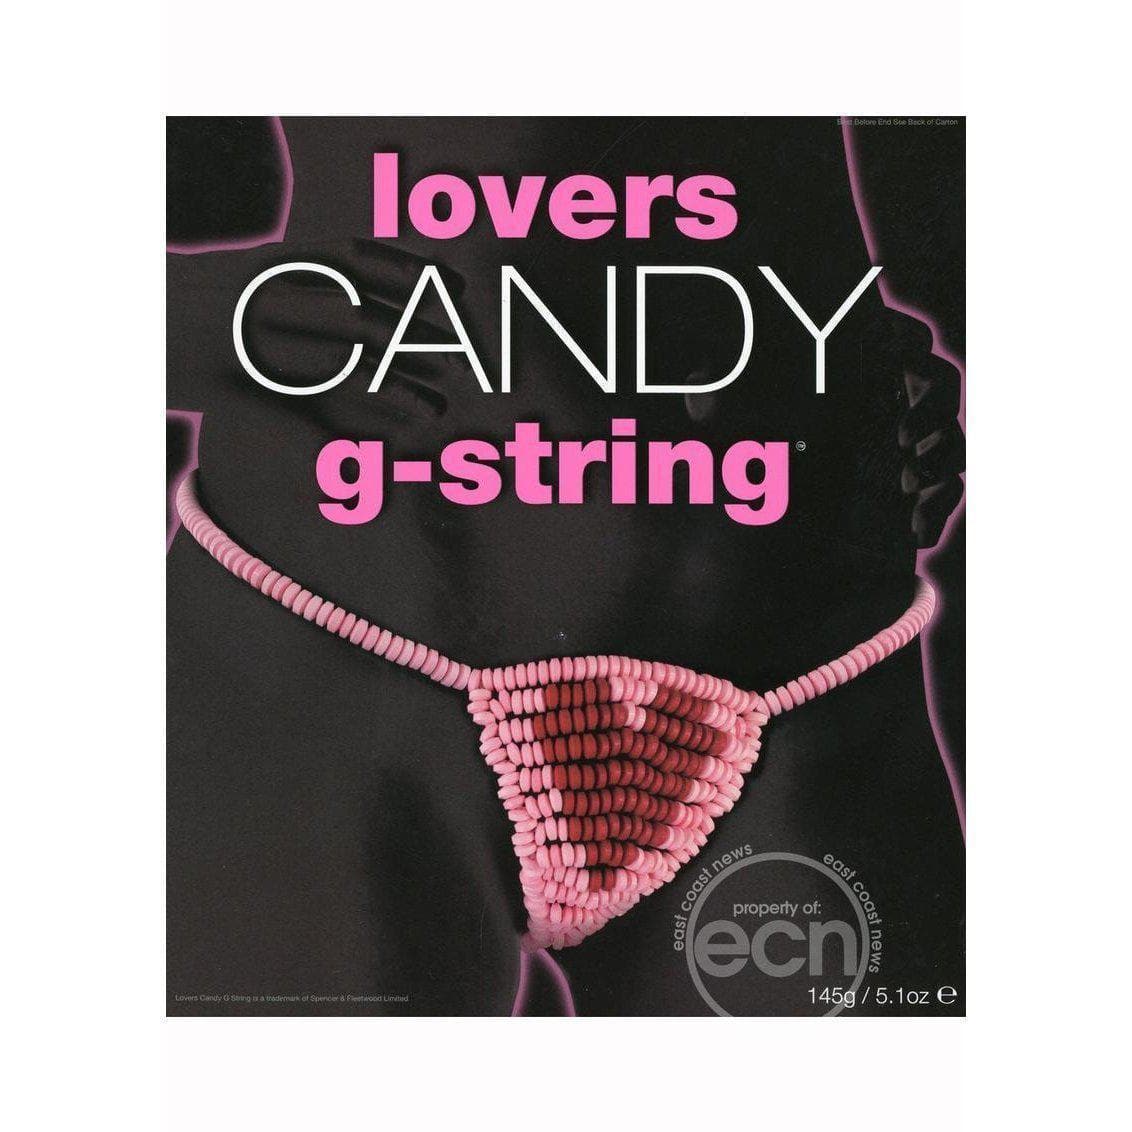 Candy: Clothing, Lingerie, Bra, Pasties, G-string, Boob Bra – It's